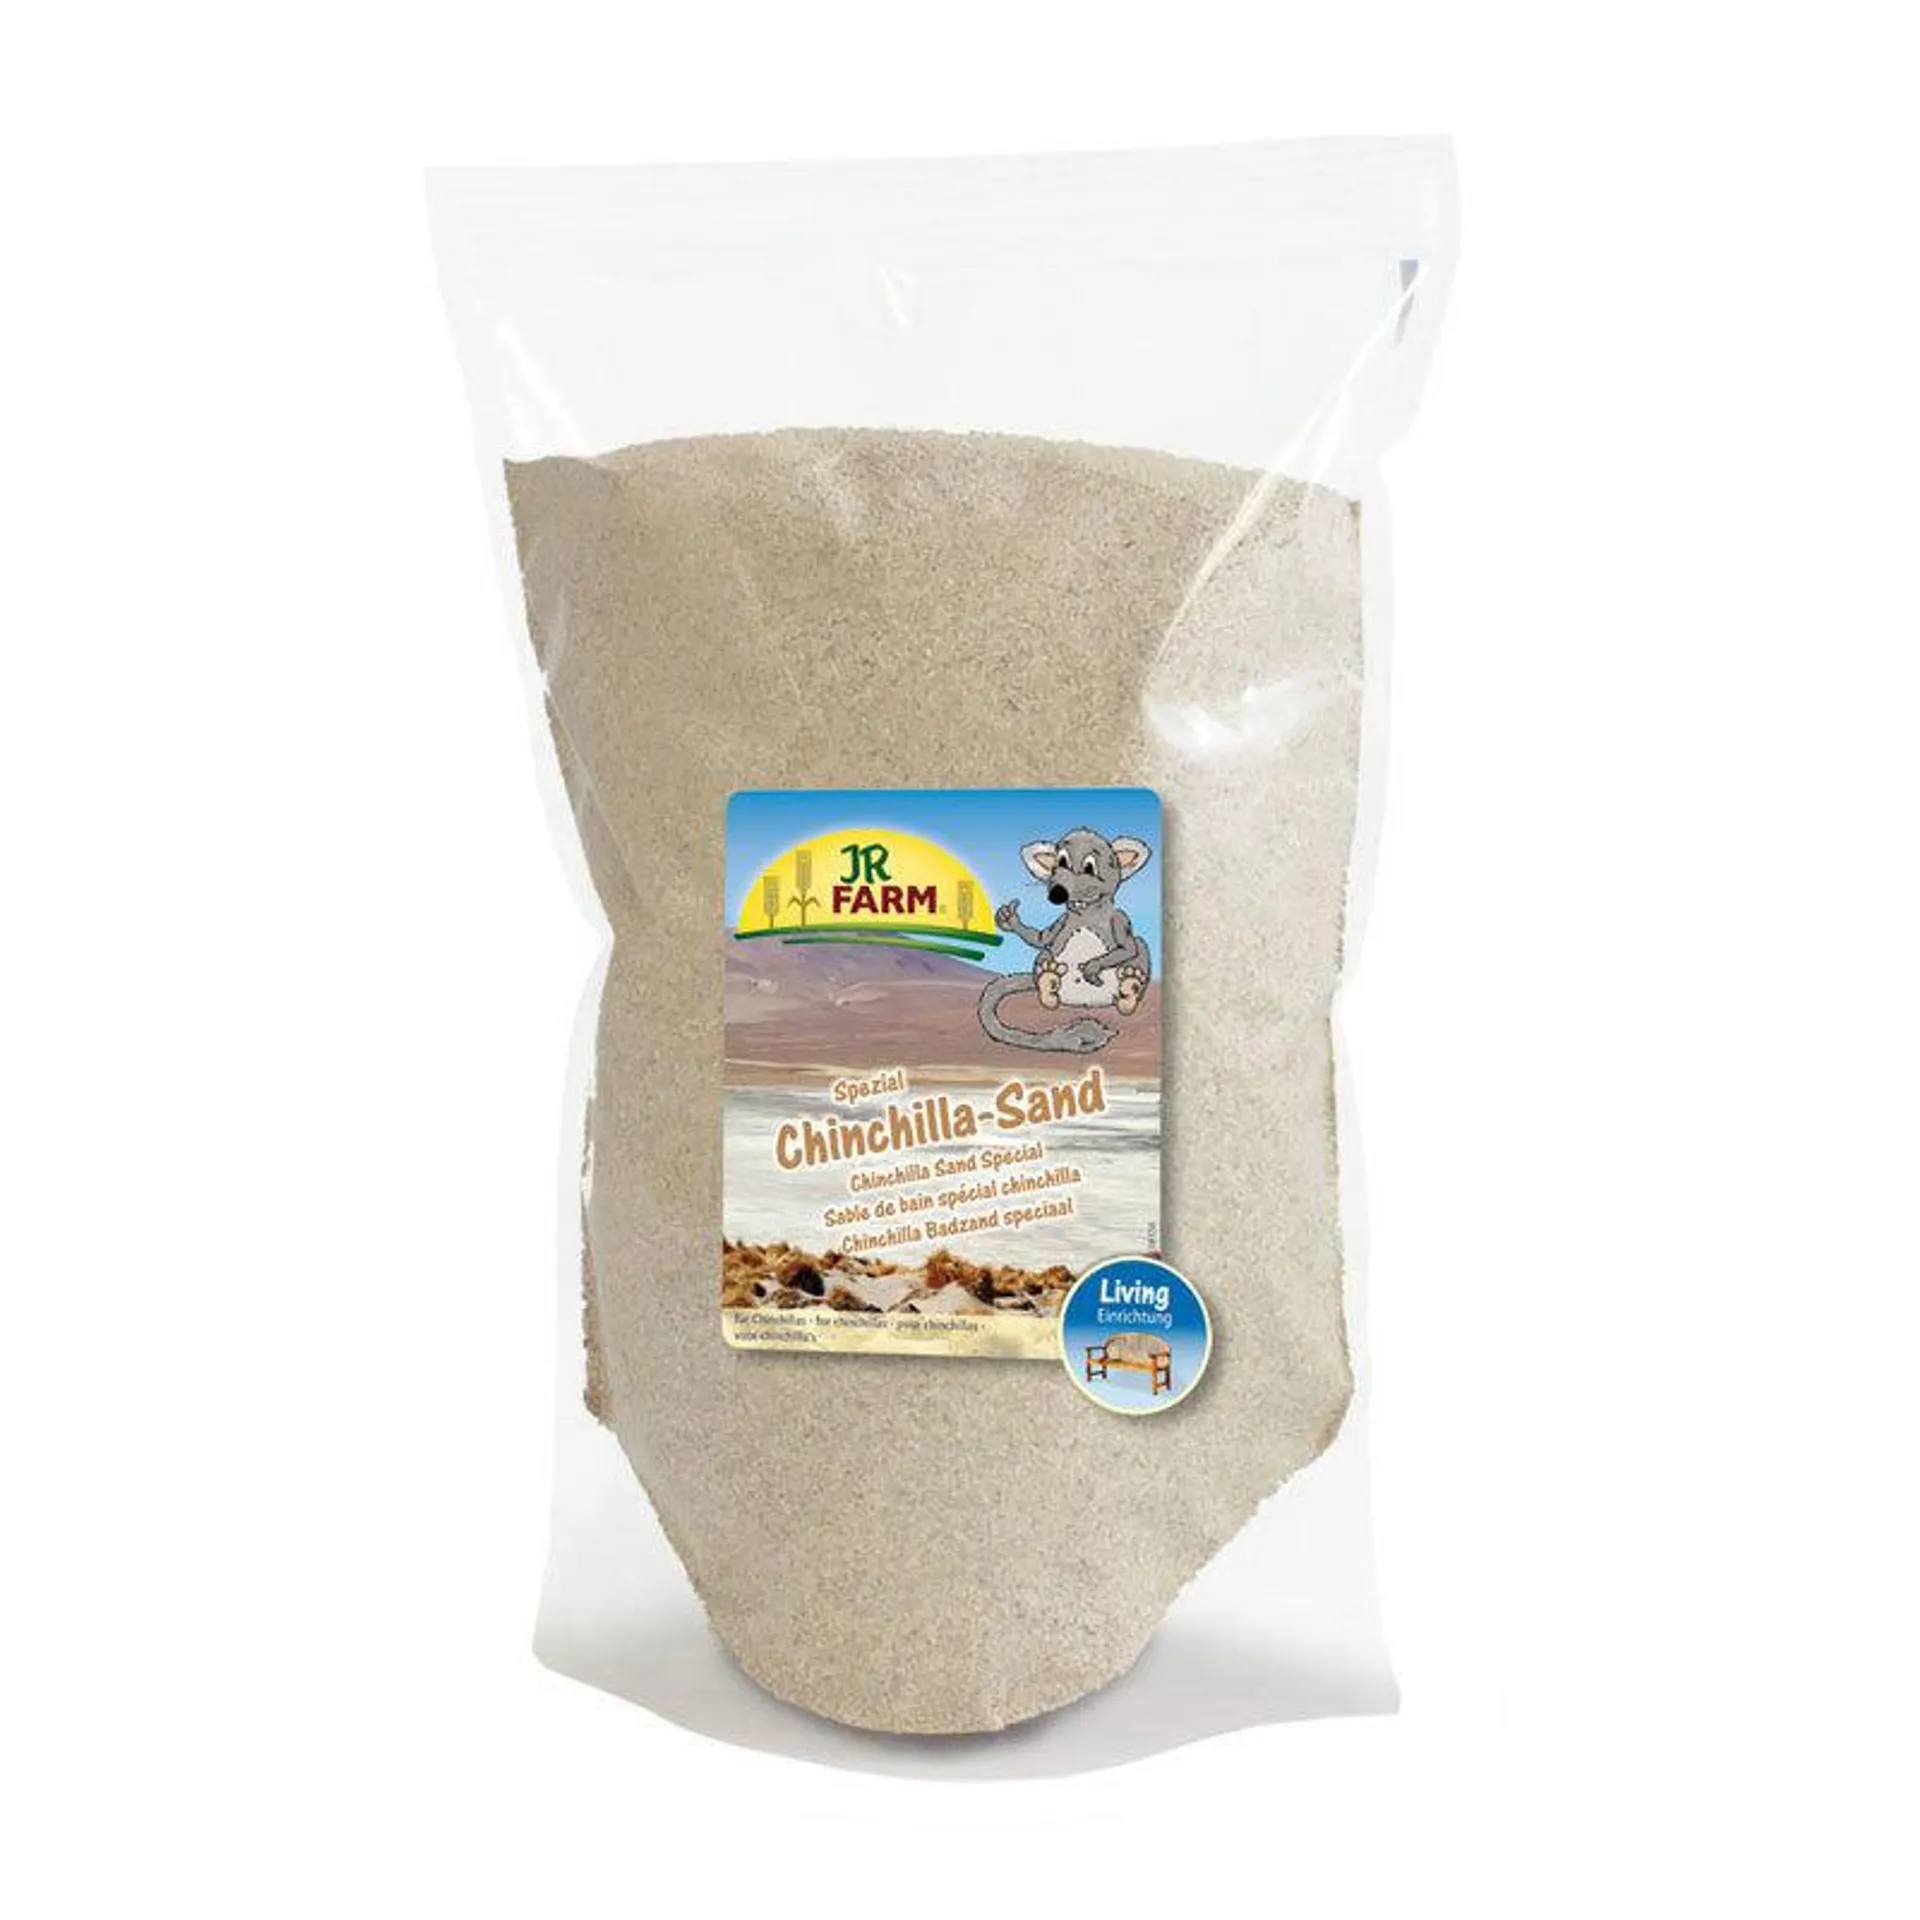 JR Farm Chinchilla-Sand Spezial 4 kg